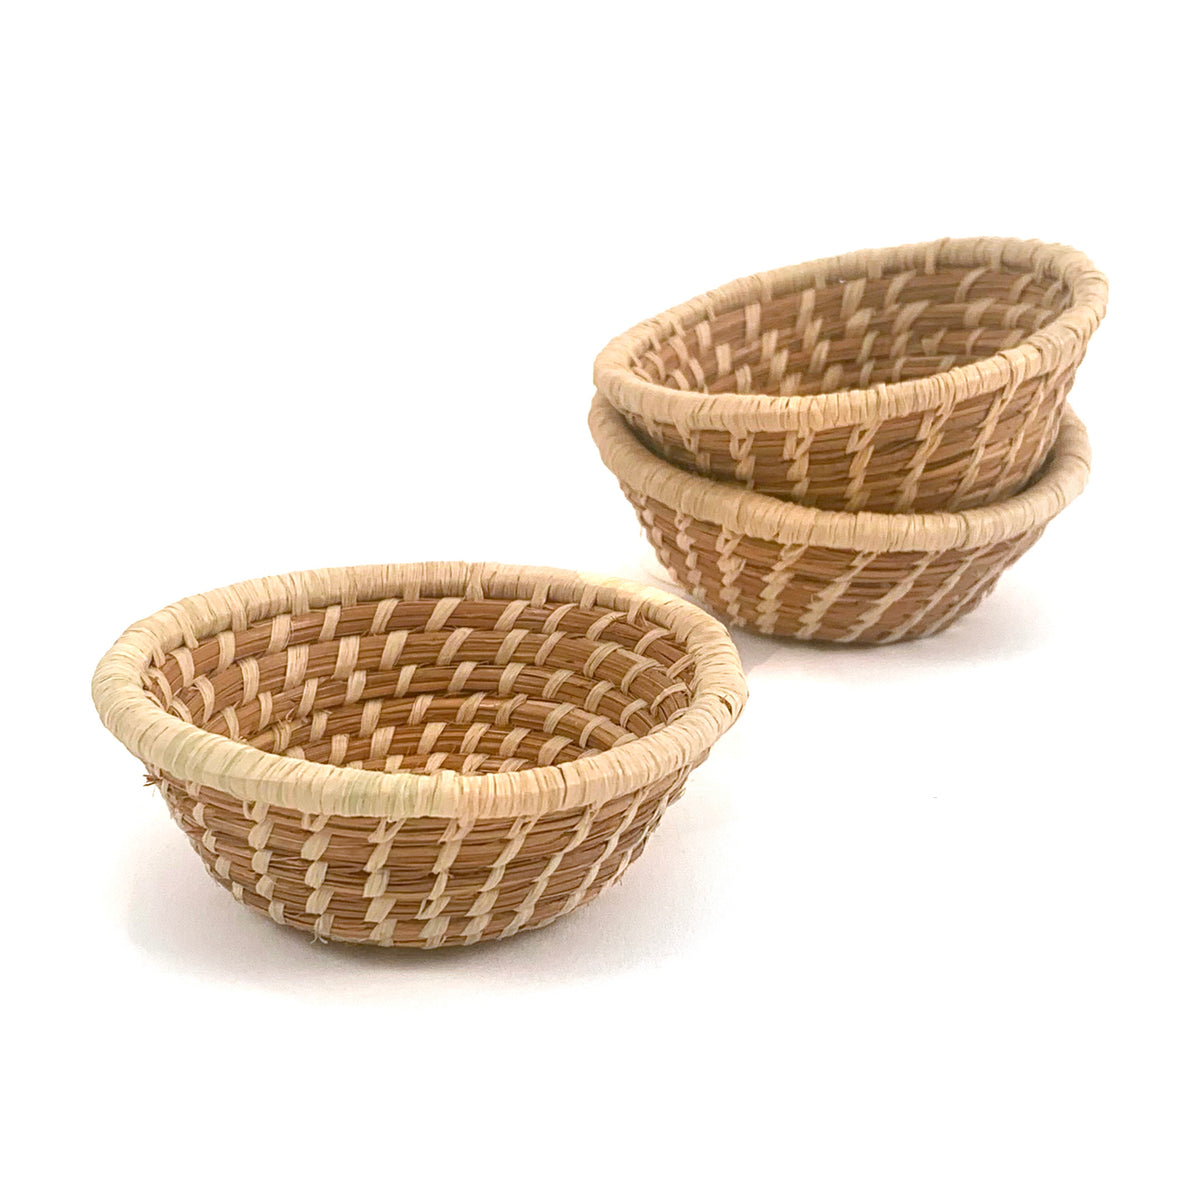 Miniature Pine Needle Basket with Rim